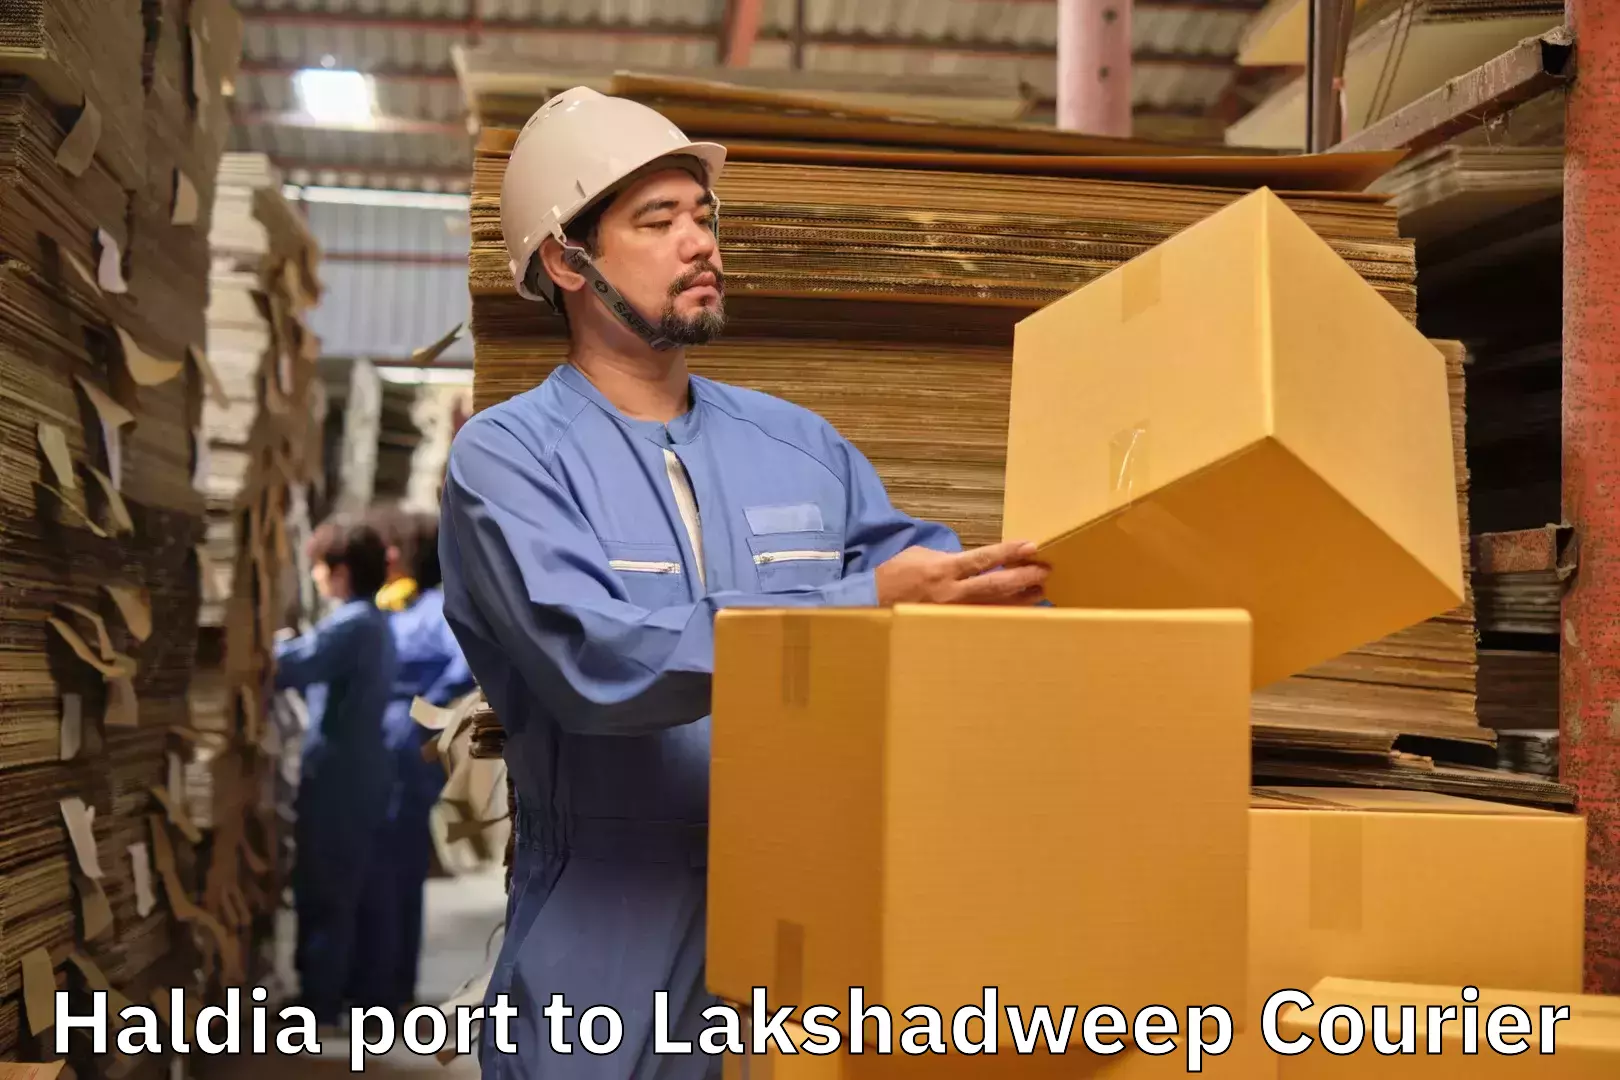 Luggage delivery app Haldia port to Lakshadweep